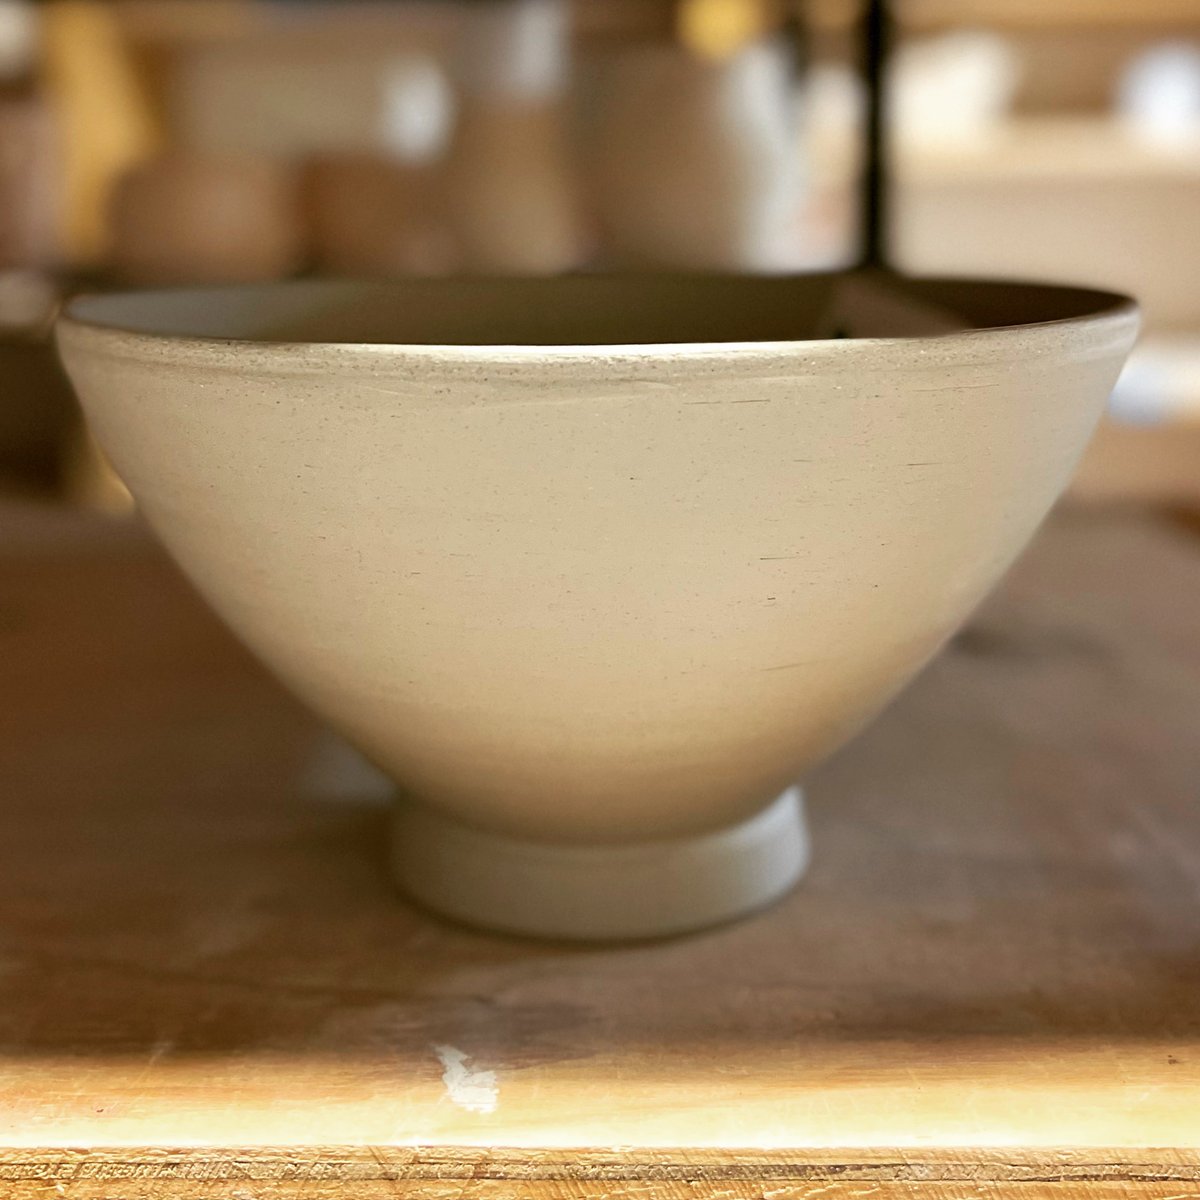 Green ware bowl ready for the #kiln 🔥

#pottery #ceramics #kilnfired #kilnfiring #kilngods #potterystudio #potterystudiolife #ceramicstudio #claystudio #artstudio #artstudiolife #workinprogress #wip #wipart #stoneware #functionalpottery #greenware #wheelthrown #rvaart #rvaartist